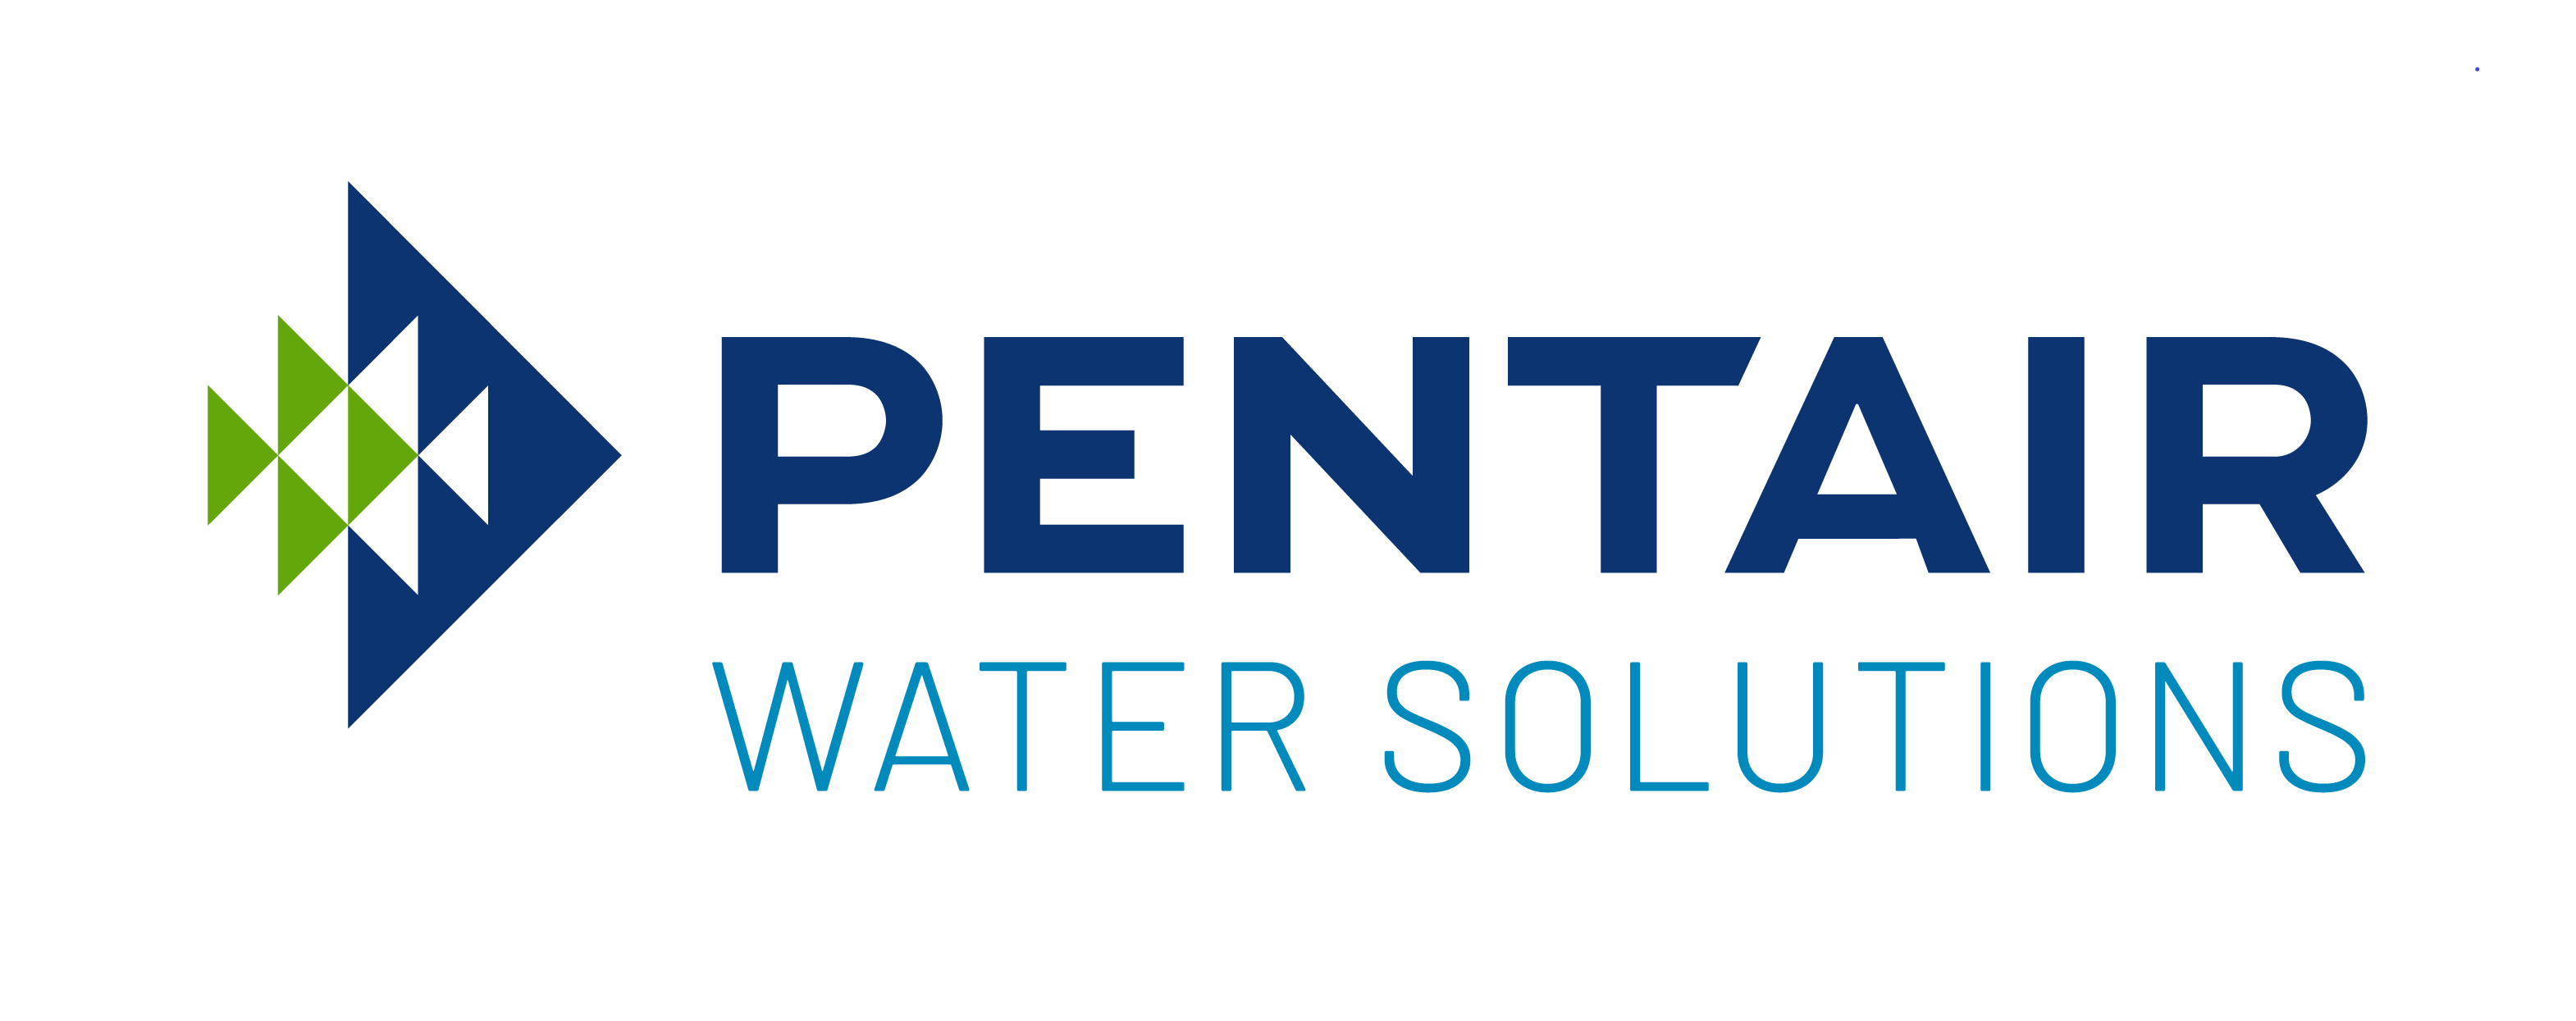 Pentair Water Solutions Logo